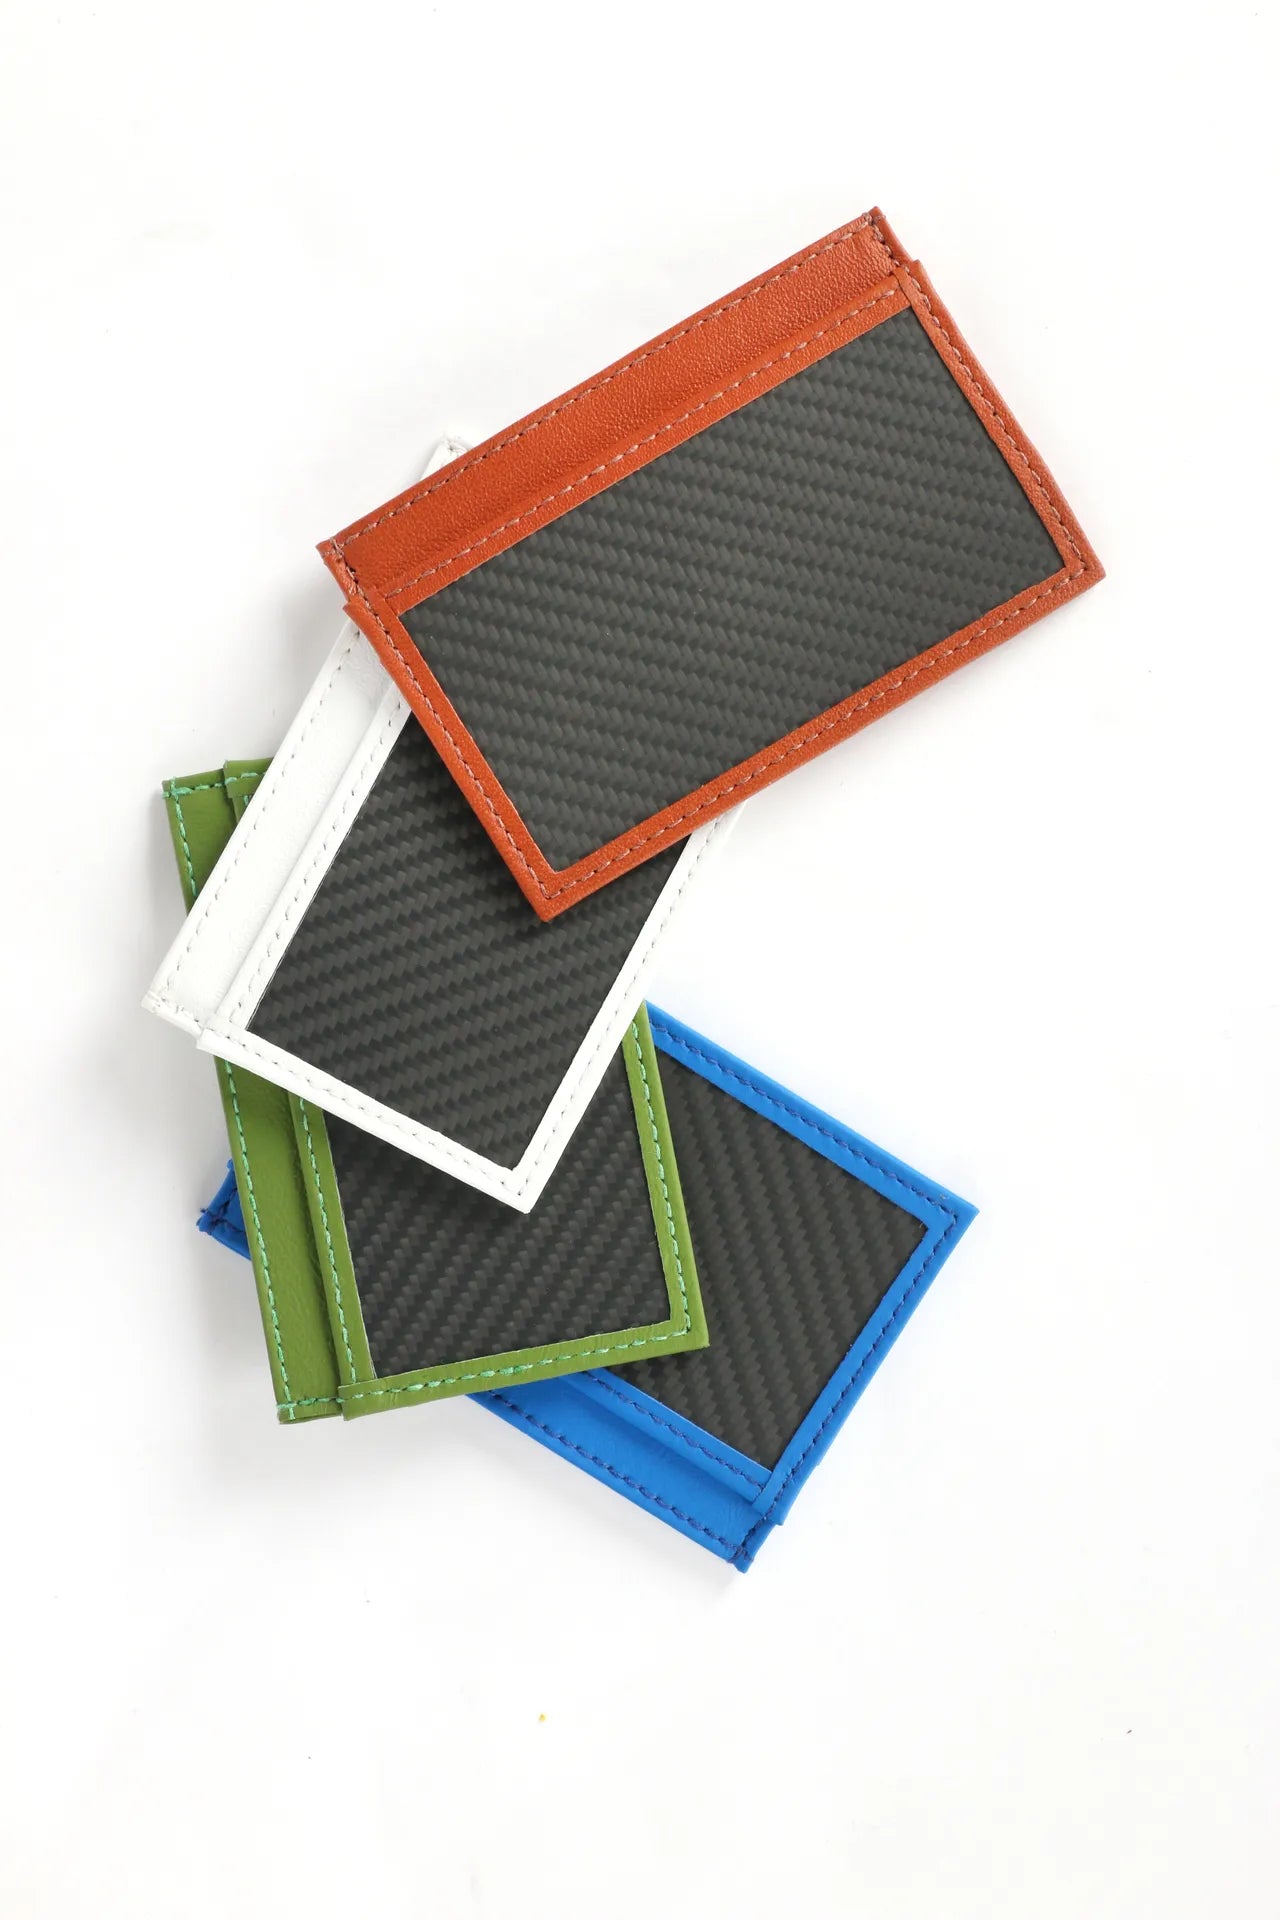 Soft carbon fiber card case in 8 colors